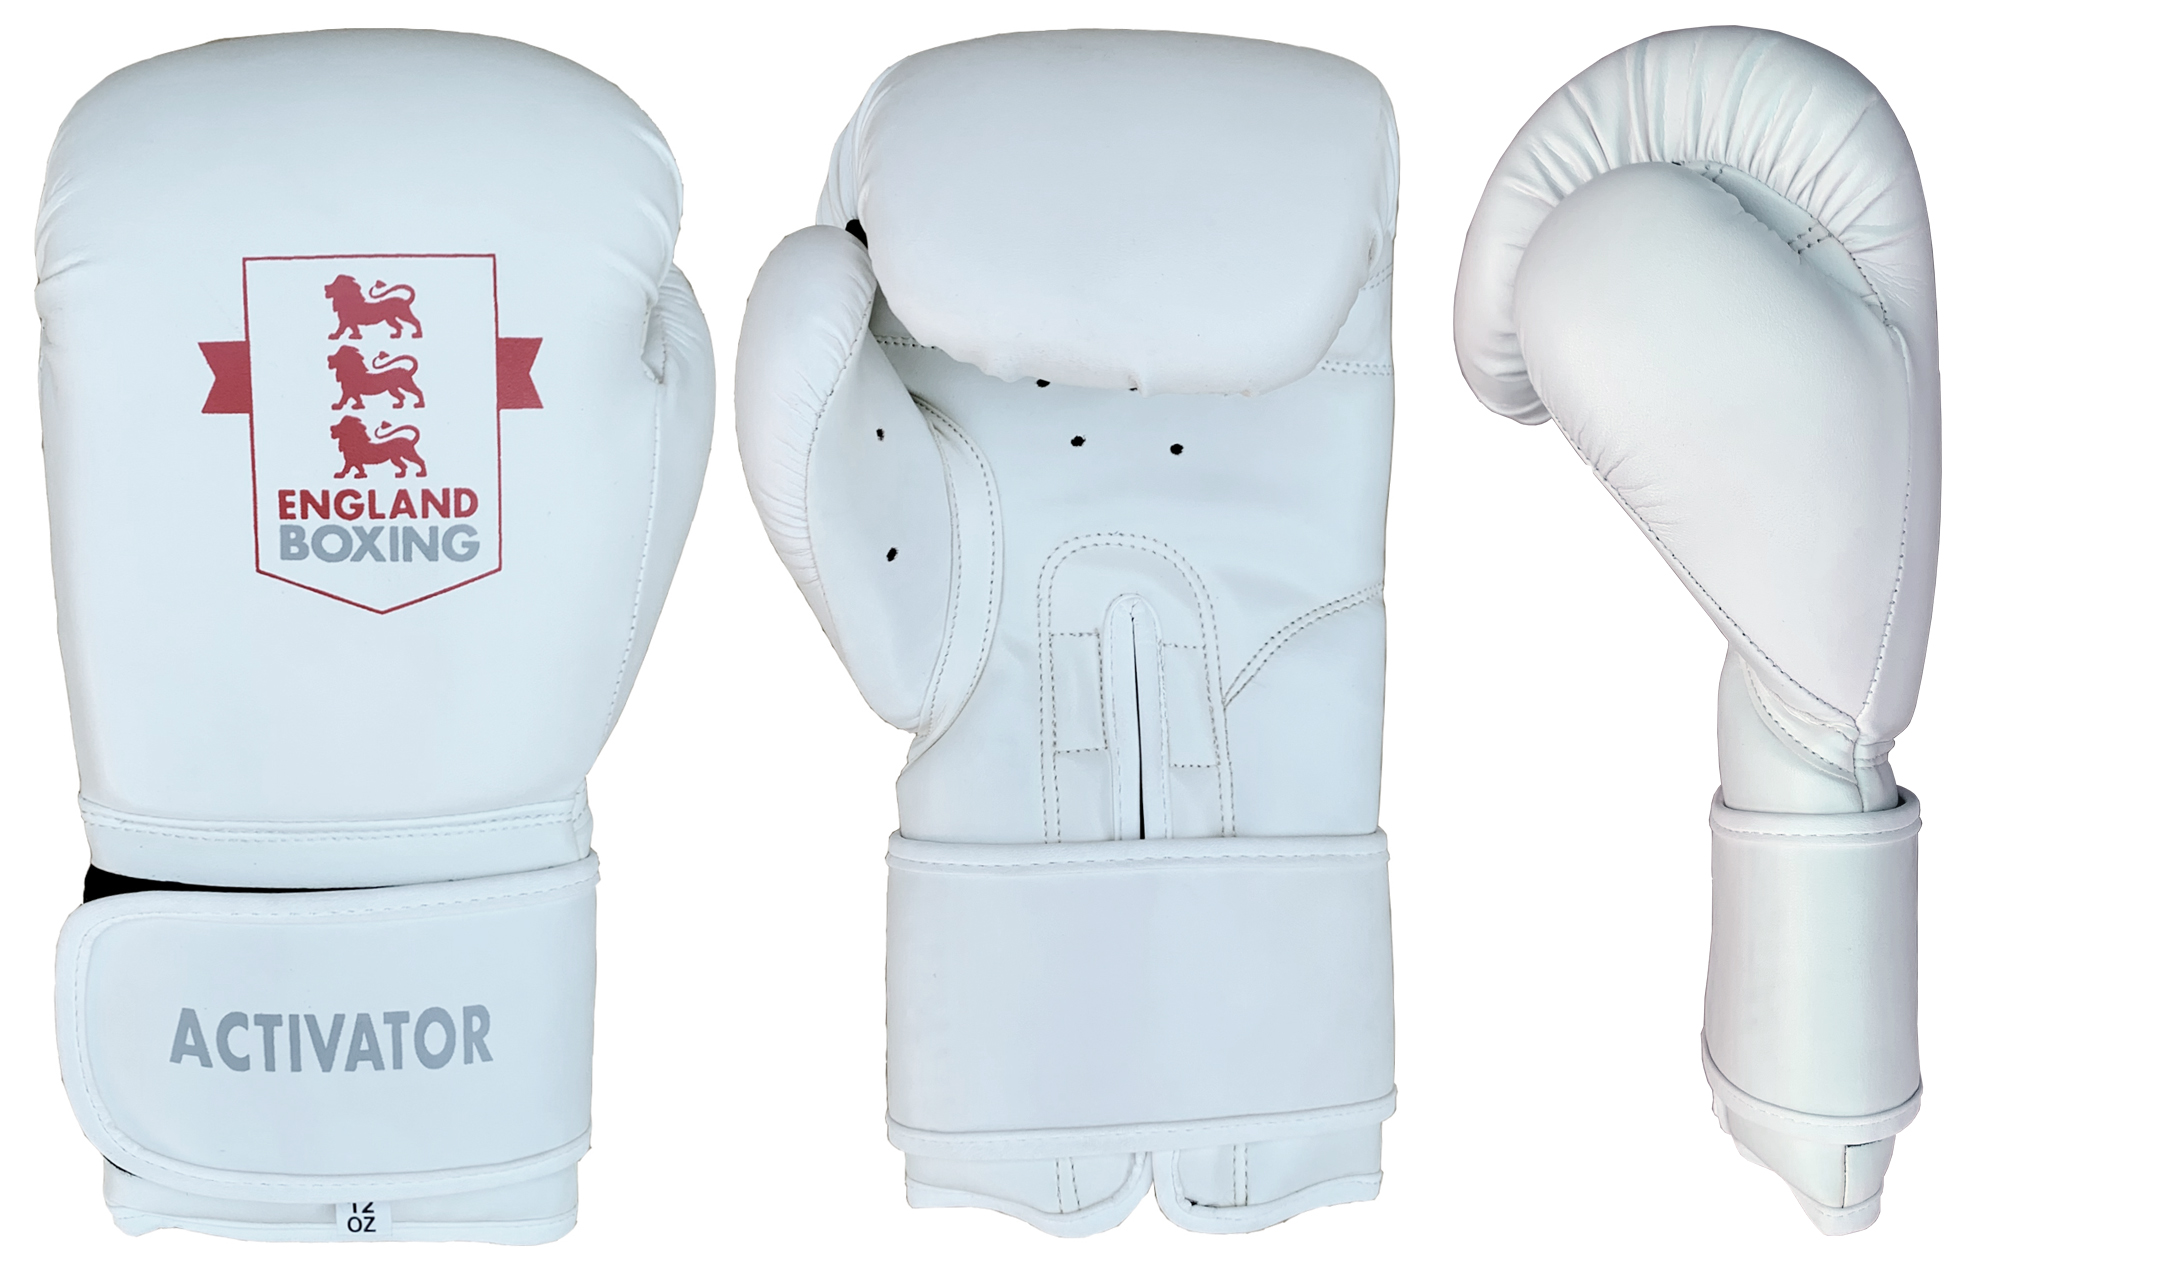 DP00055094 - England Boxing Gloves - 12oz - Pair